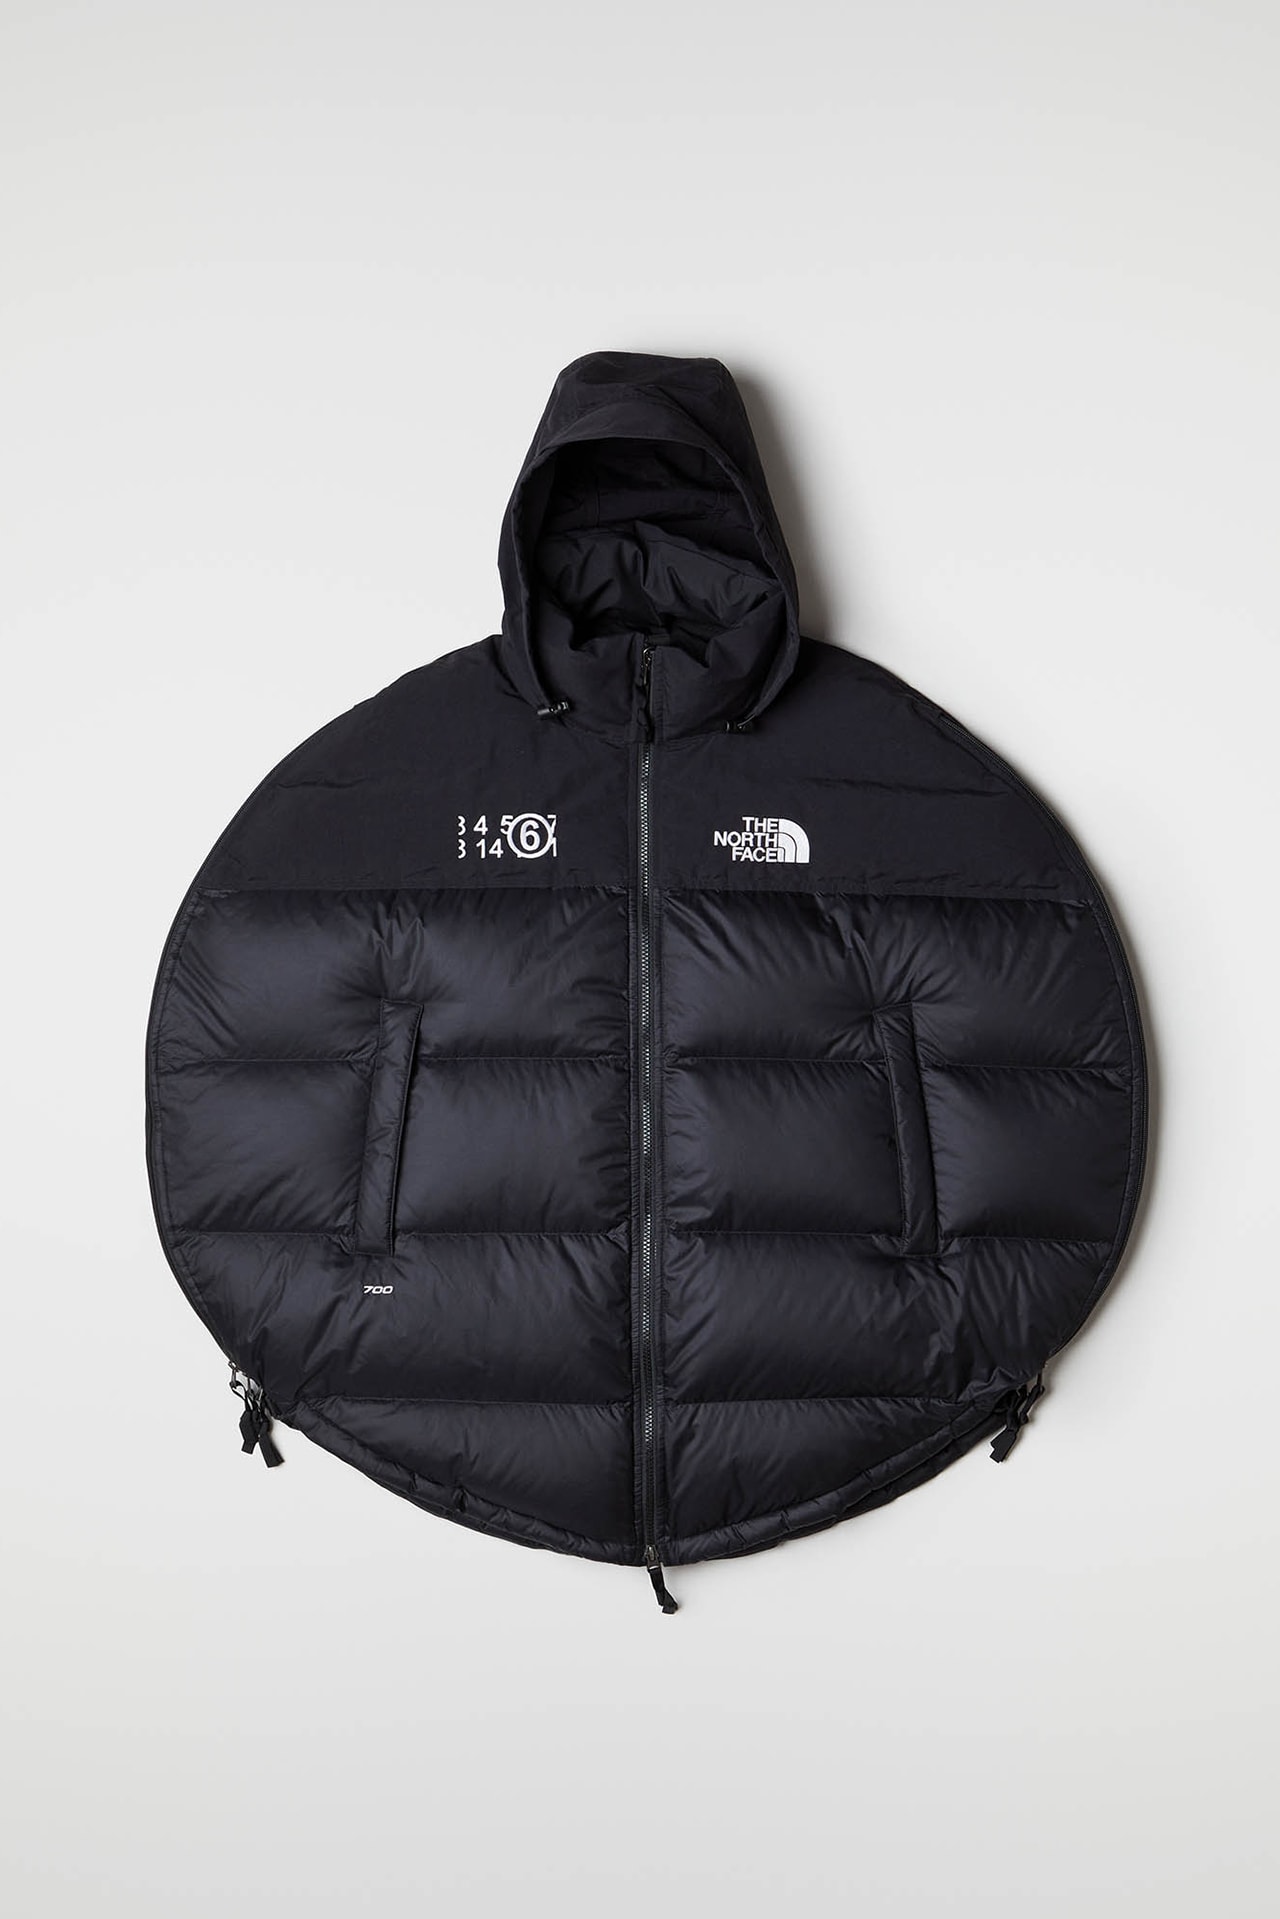 MM6 Maison Margiela The North Face Collaboration Fall Winter 2020 Circle Nuptse Puffer Jacket Black